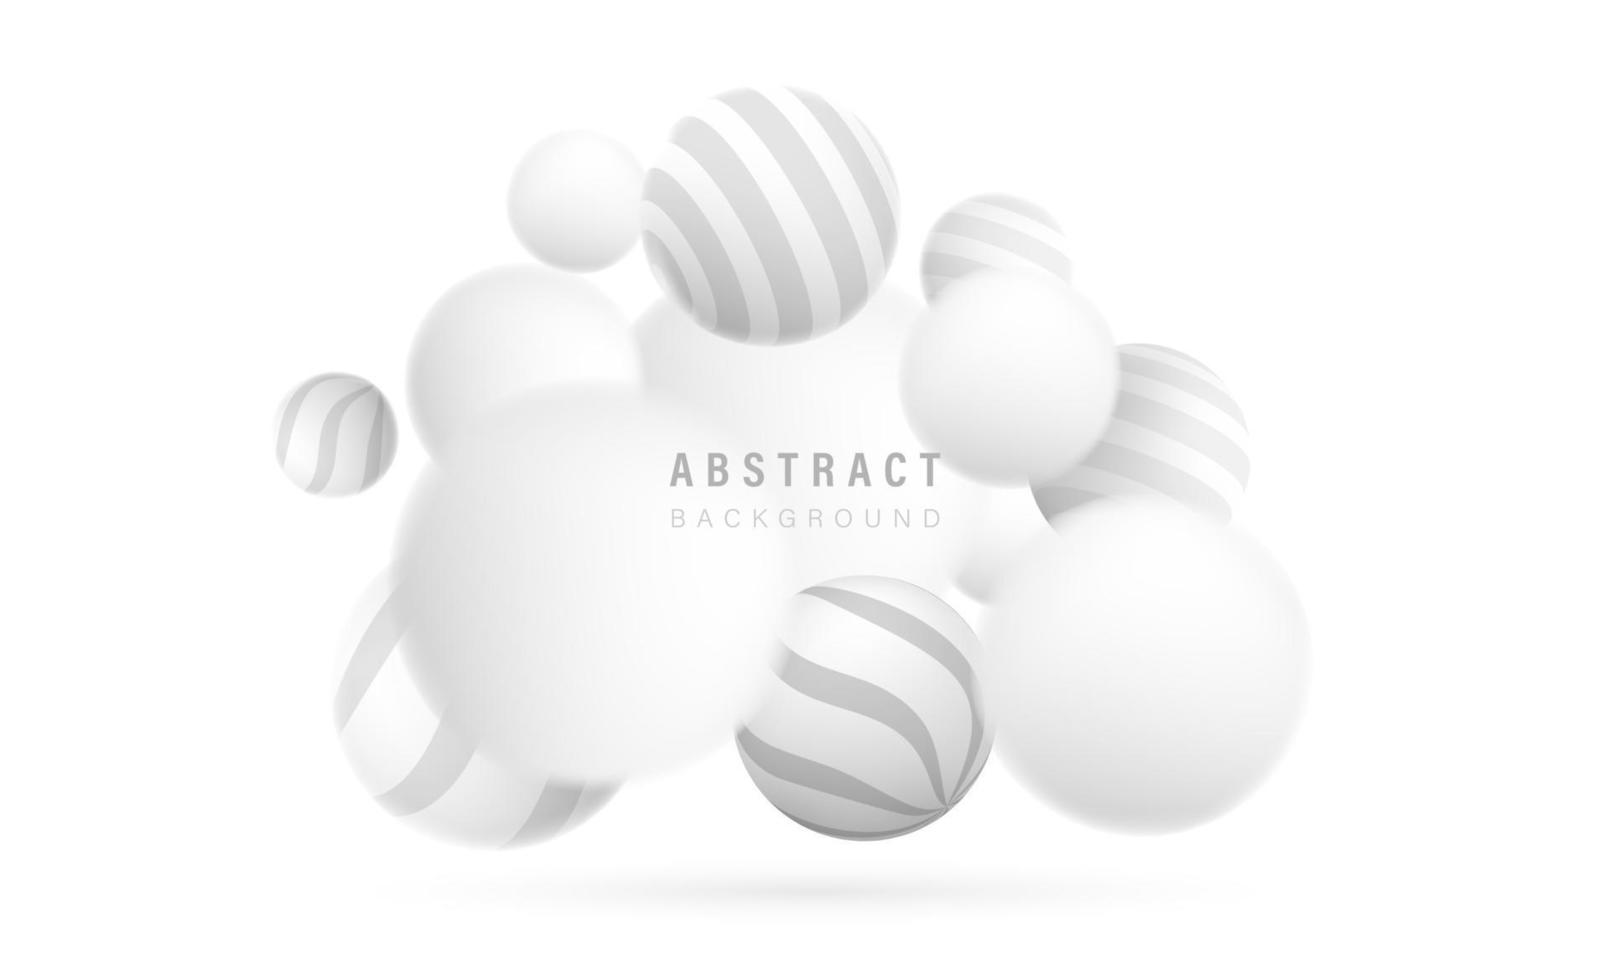 fondo gris blanco abstracto con elementos de patrón de bola de círculo 3d. concepto de diseño de arte para banner, afiche, portada o fondos de negocios. ilustración vectorial vector